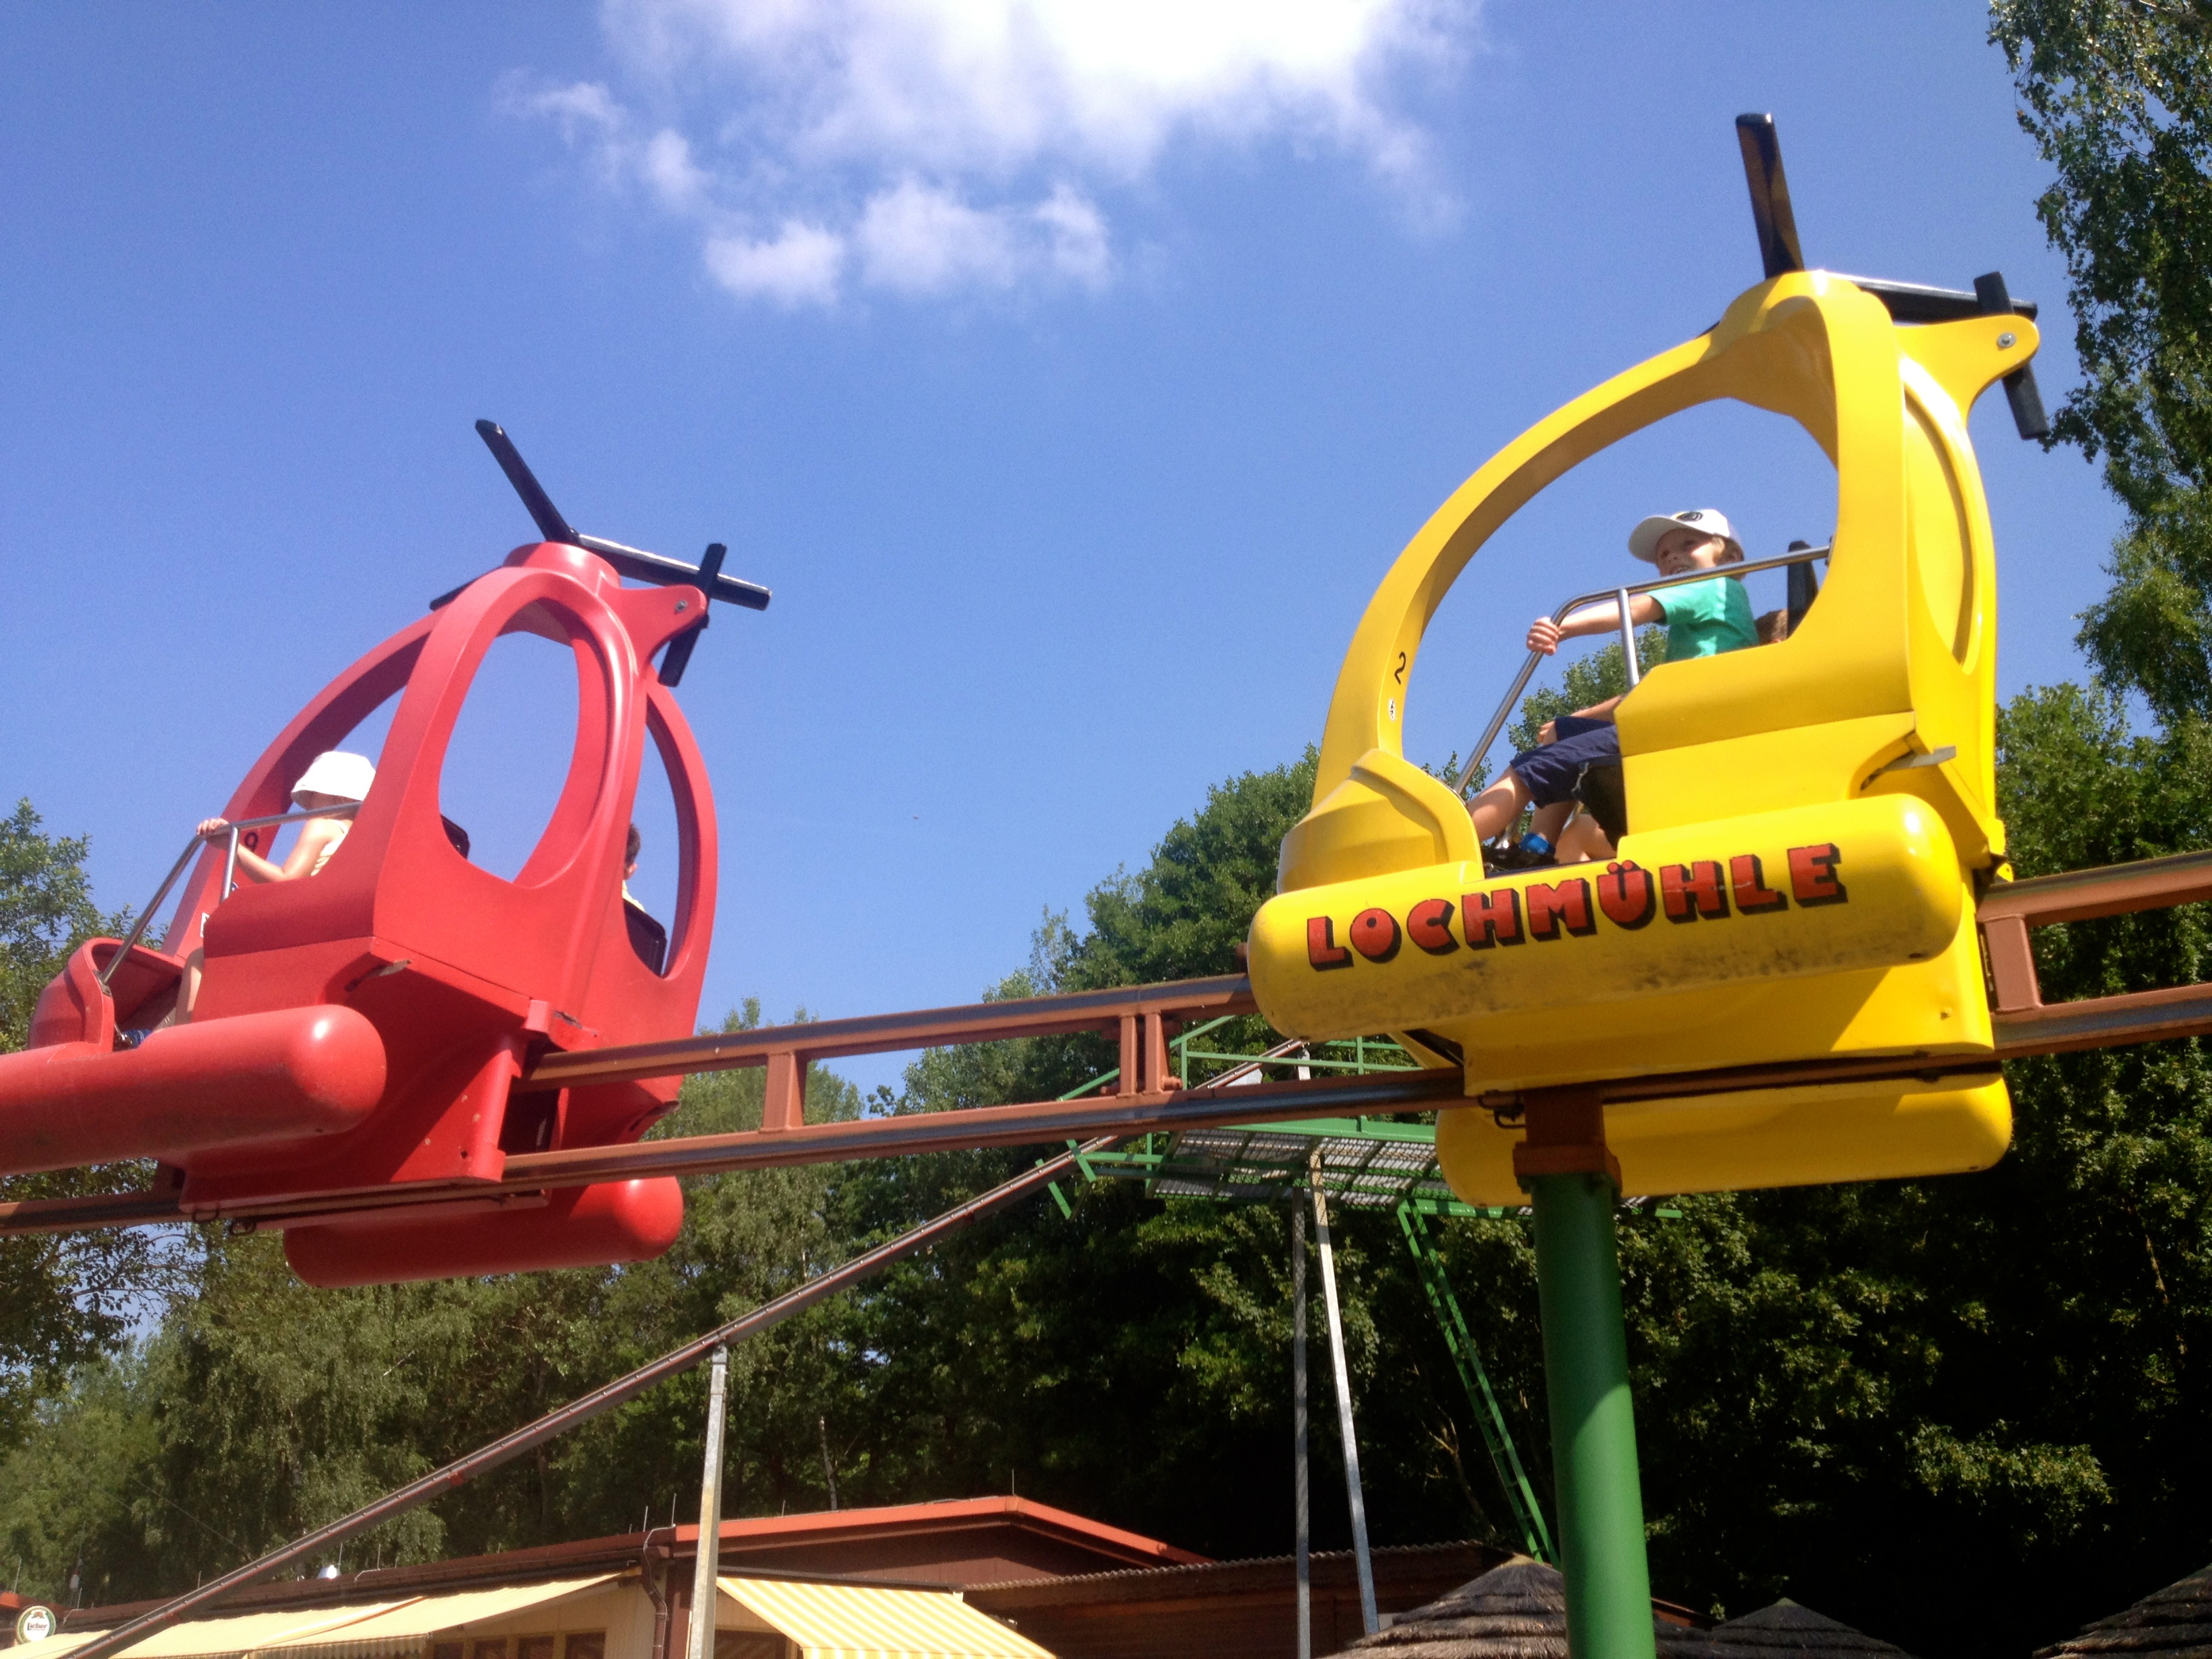 Lochmeuhle: amusement park or physics class?